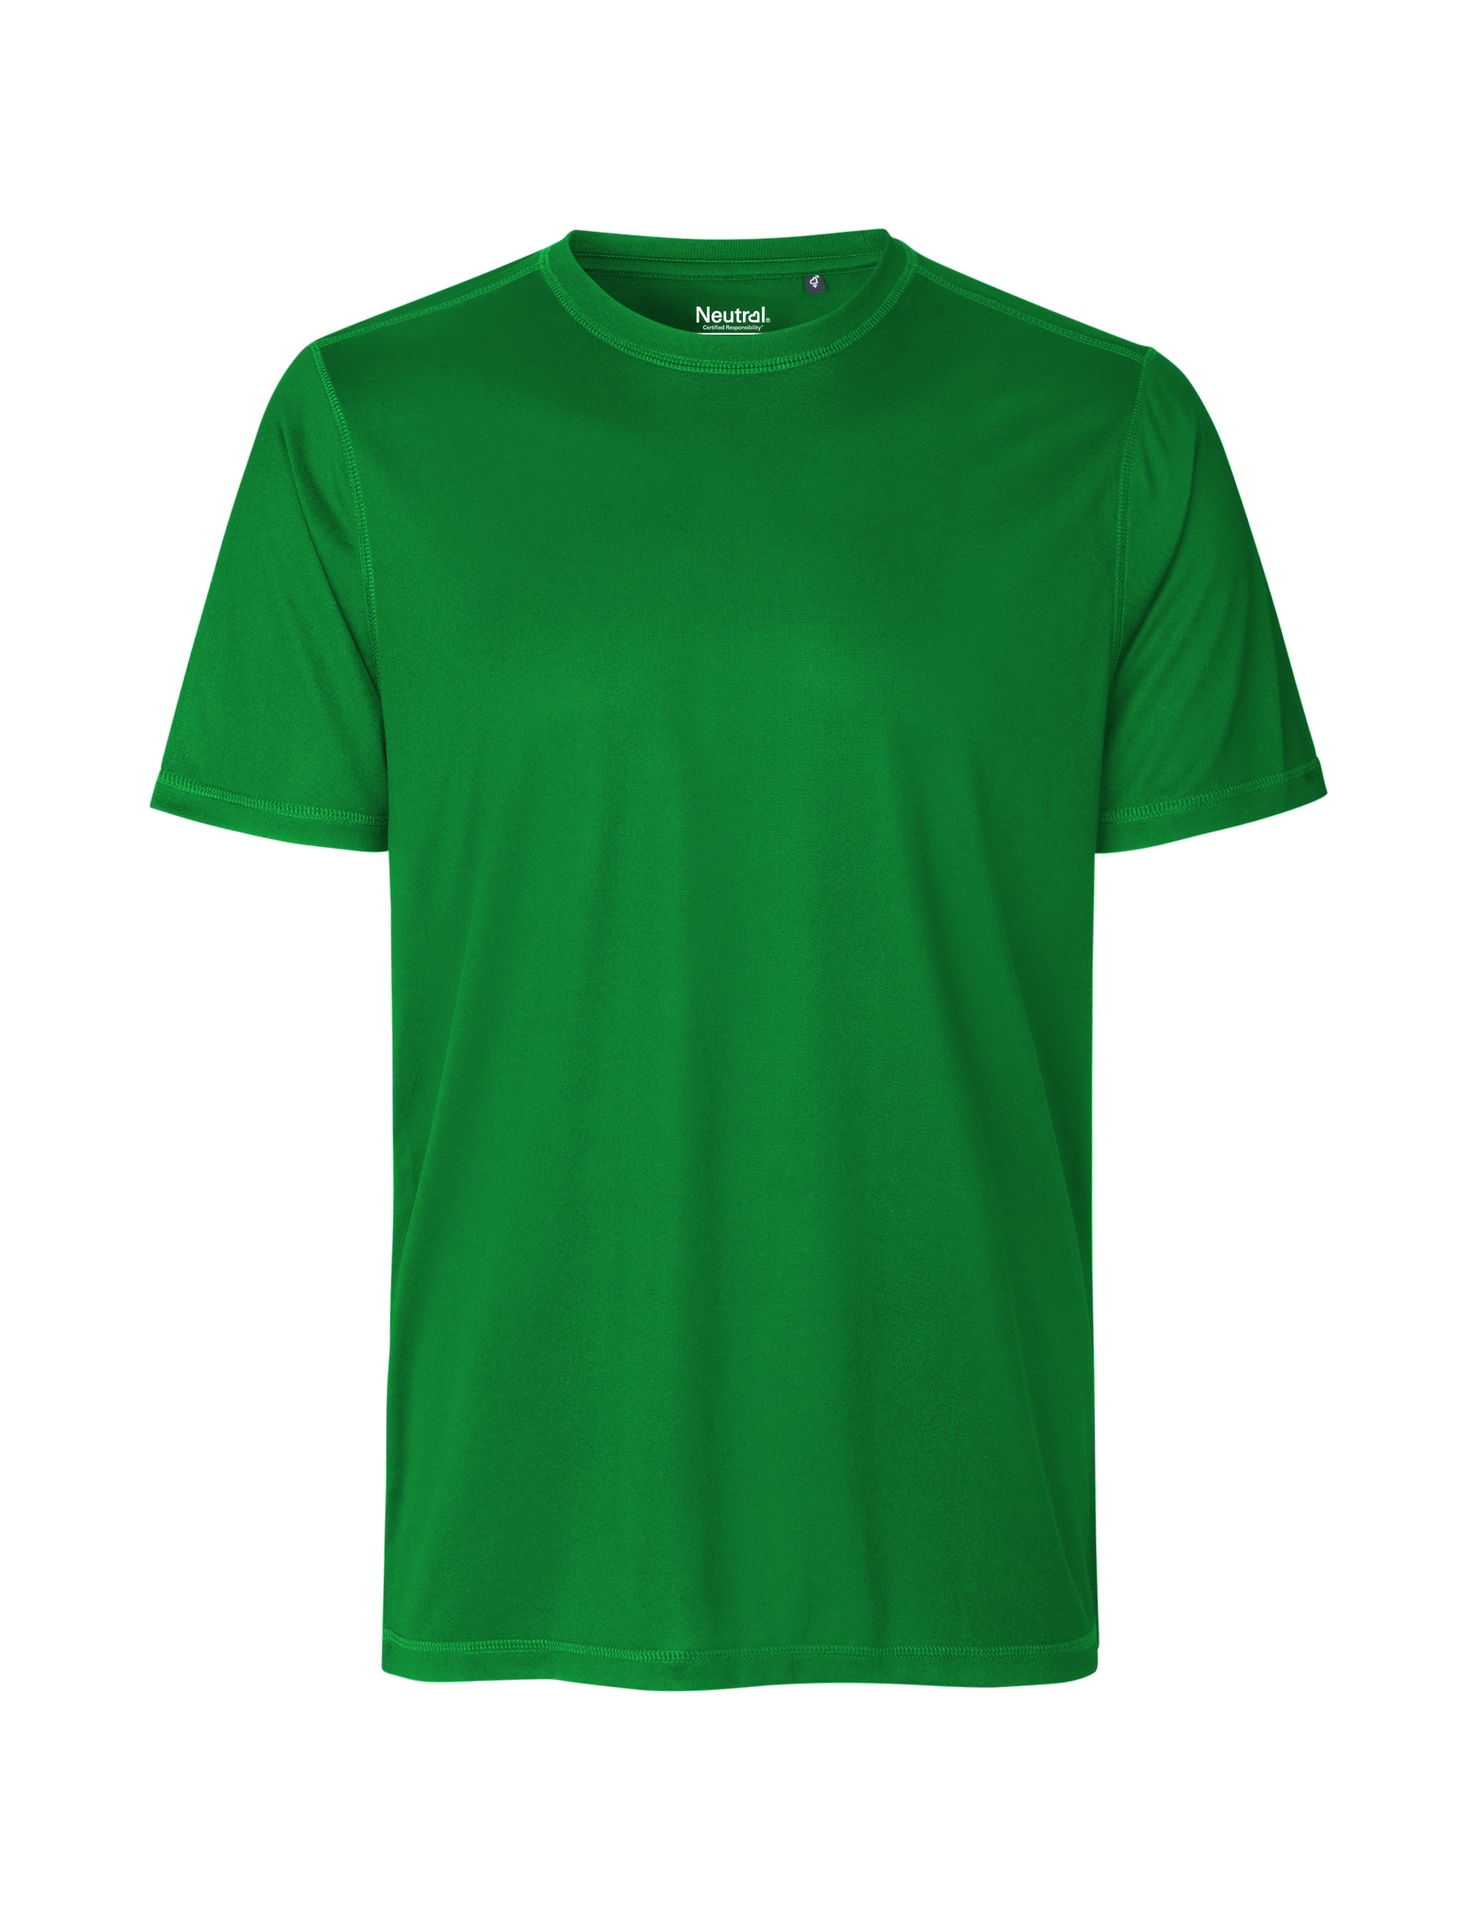 [PR/03810] Recycled Performance T-Shirt (Green 67, L)